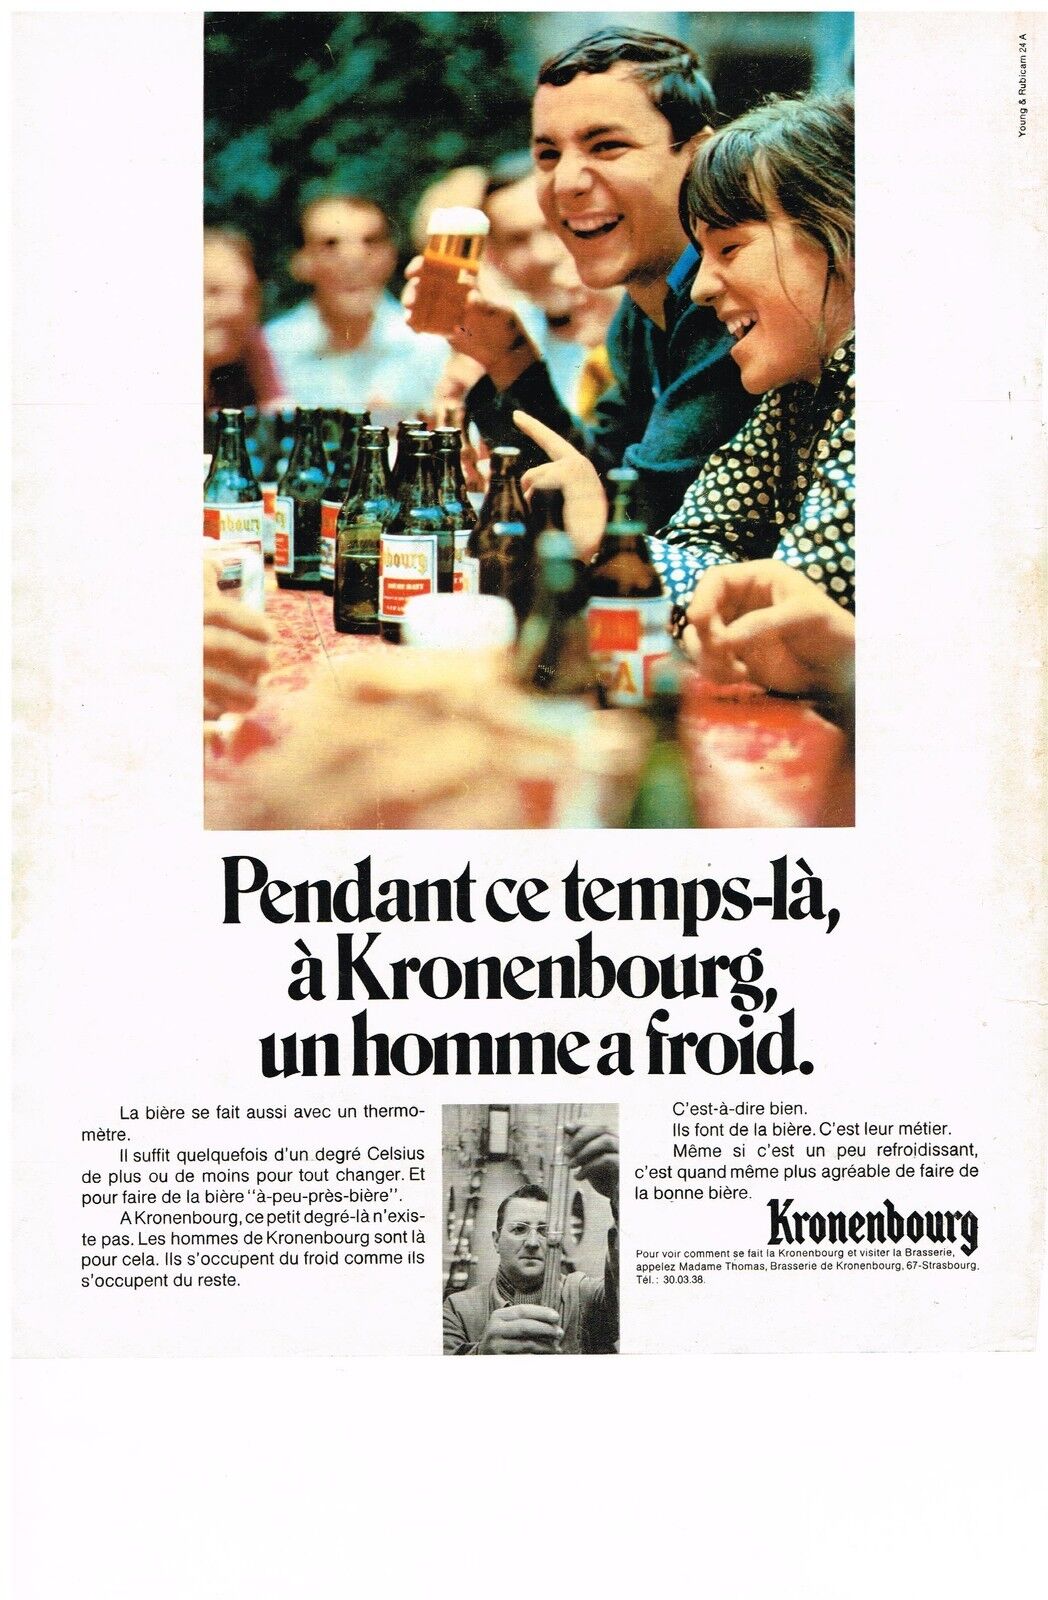 1969 KRONENBURG ADVERTISEMENT beer